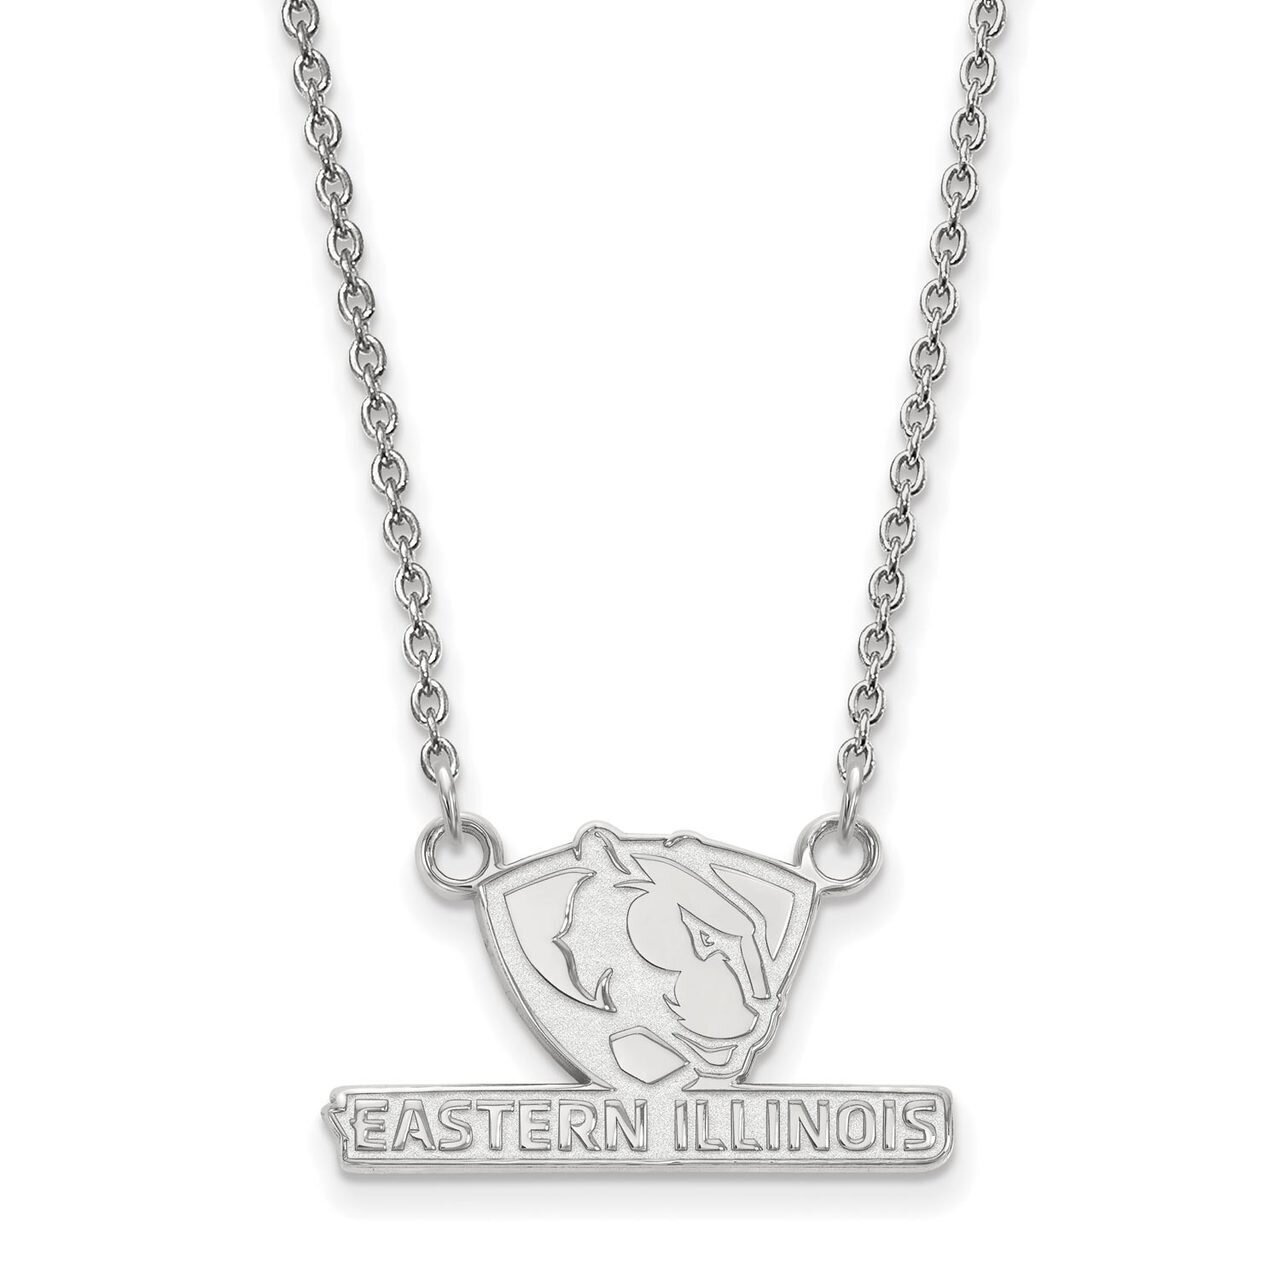 Eastern Illinois University Small Pendant with Chain Necklace 10k White Gold 1W007EIU-18